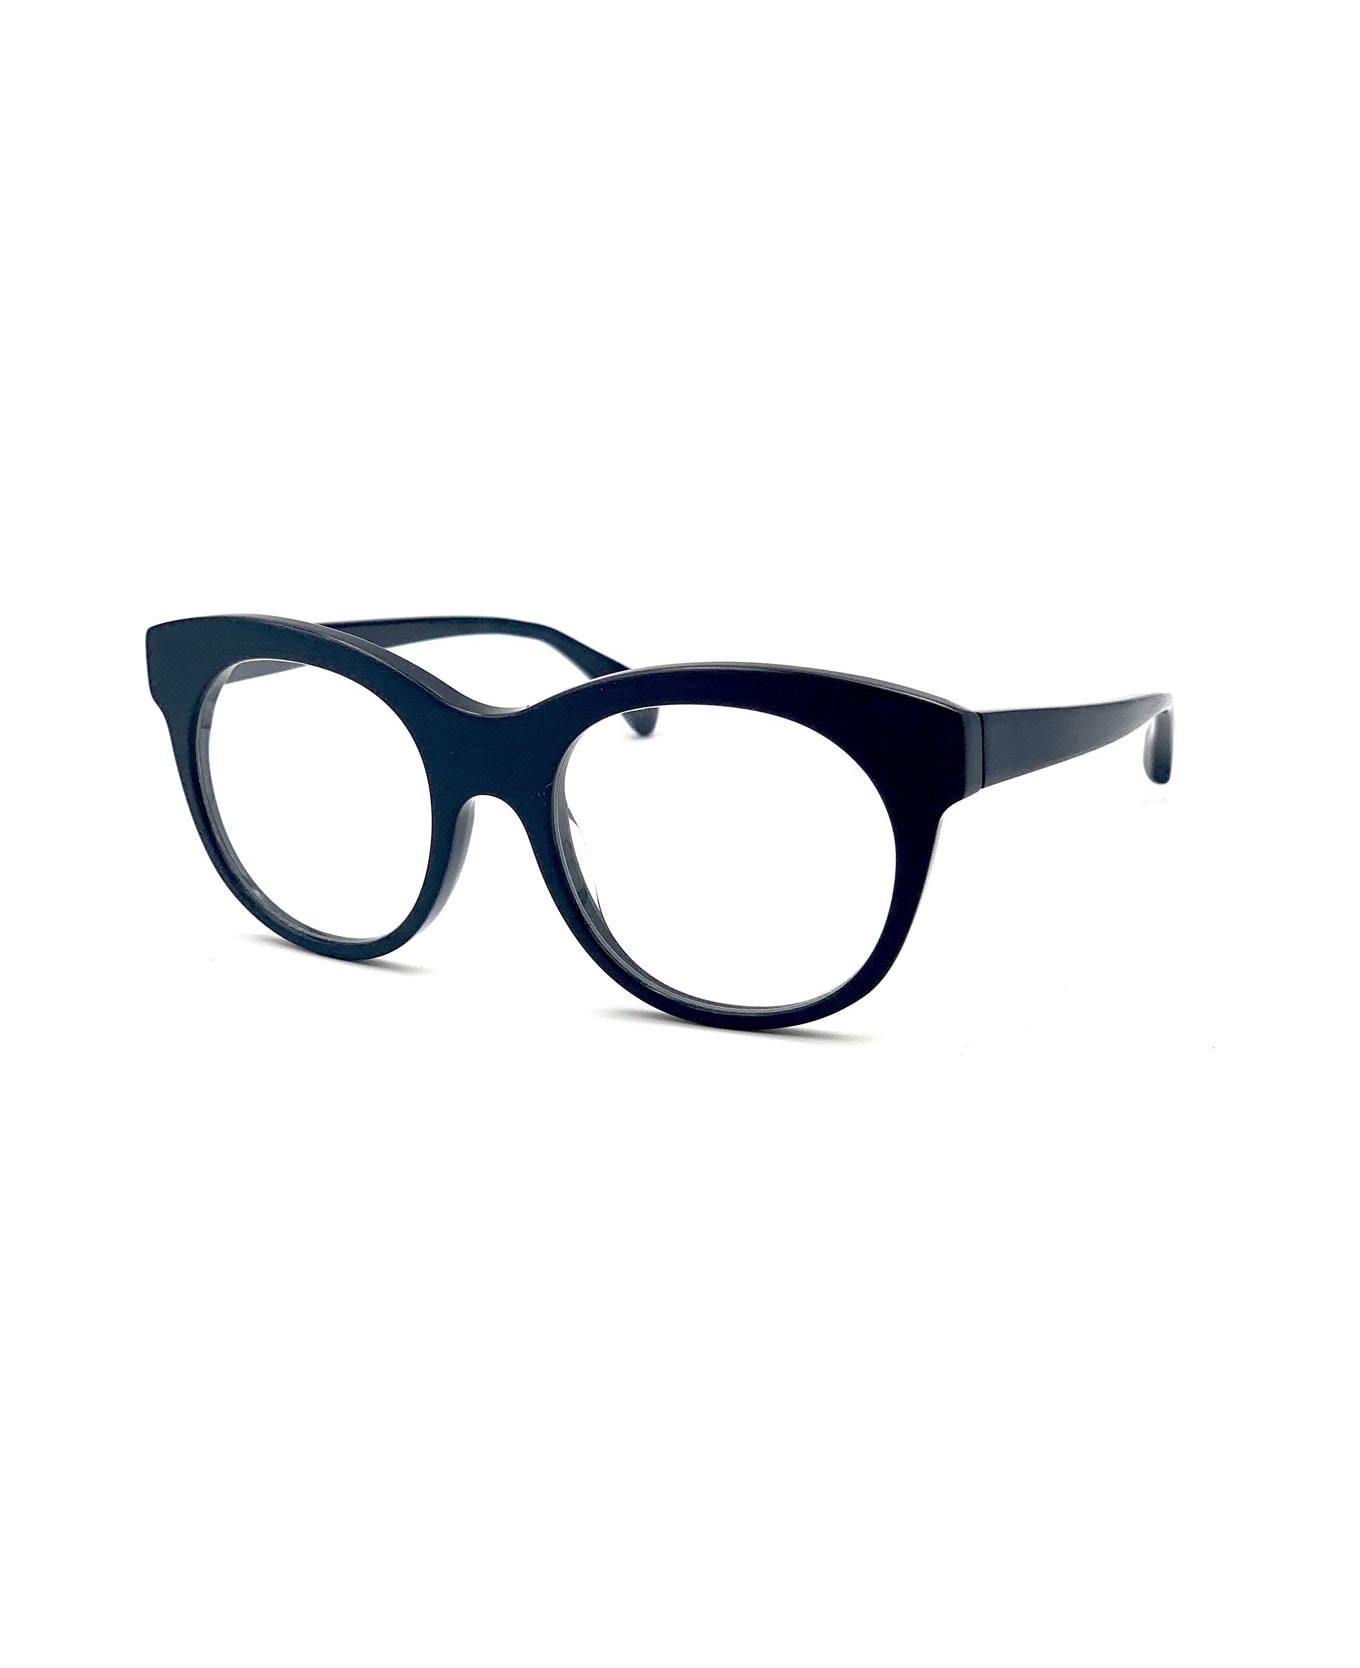 Jacques Durand Port-cros Xl170 Glasses - Nero アイウェア